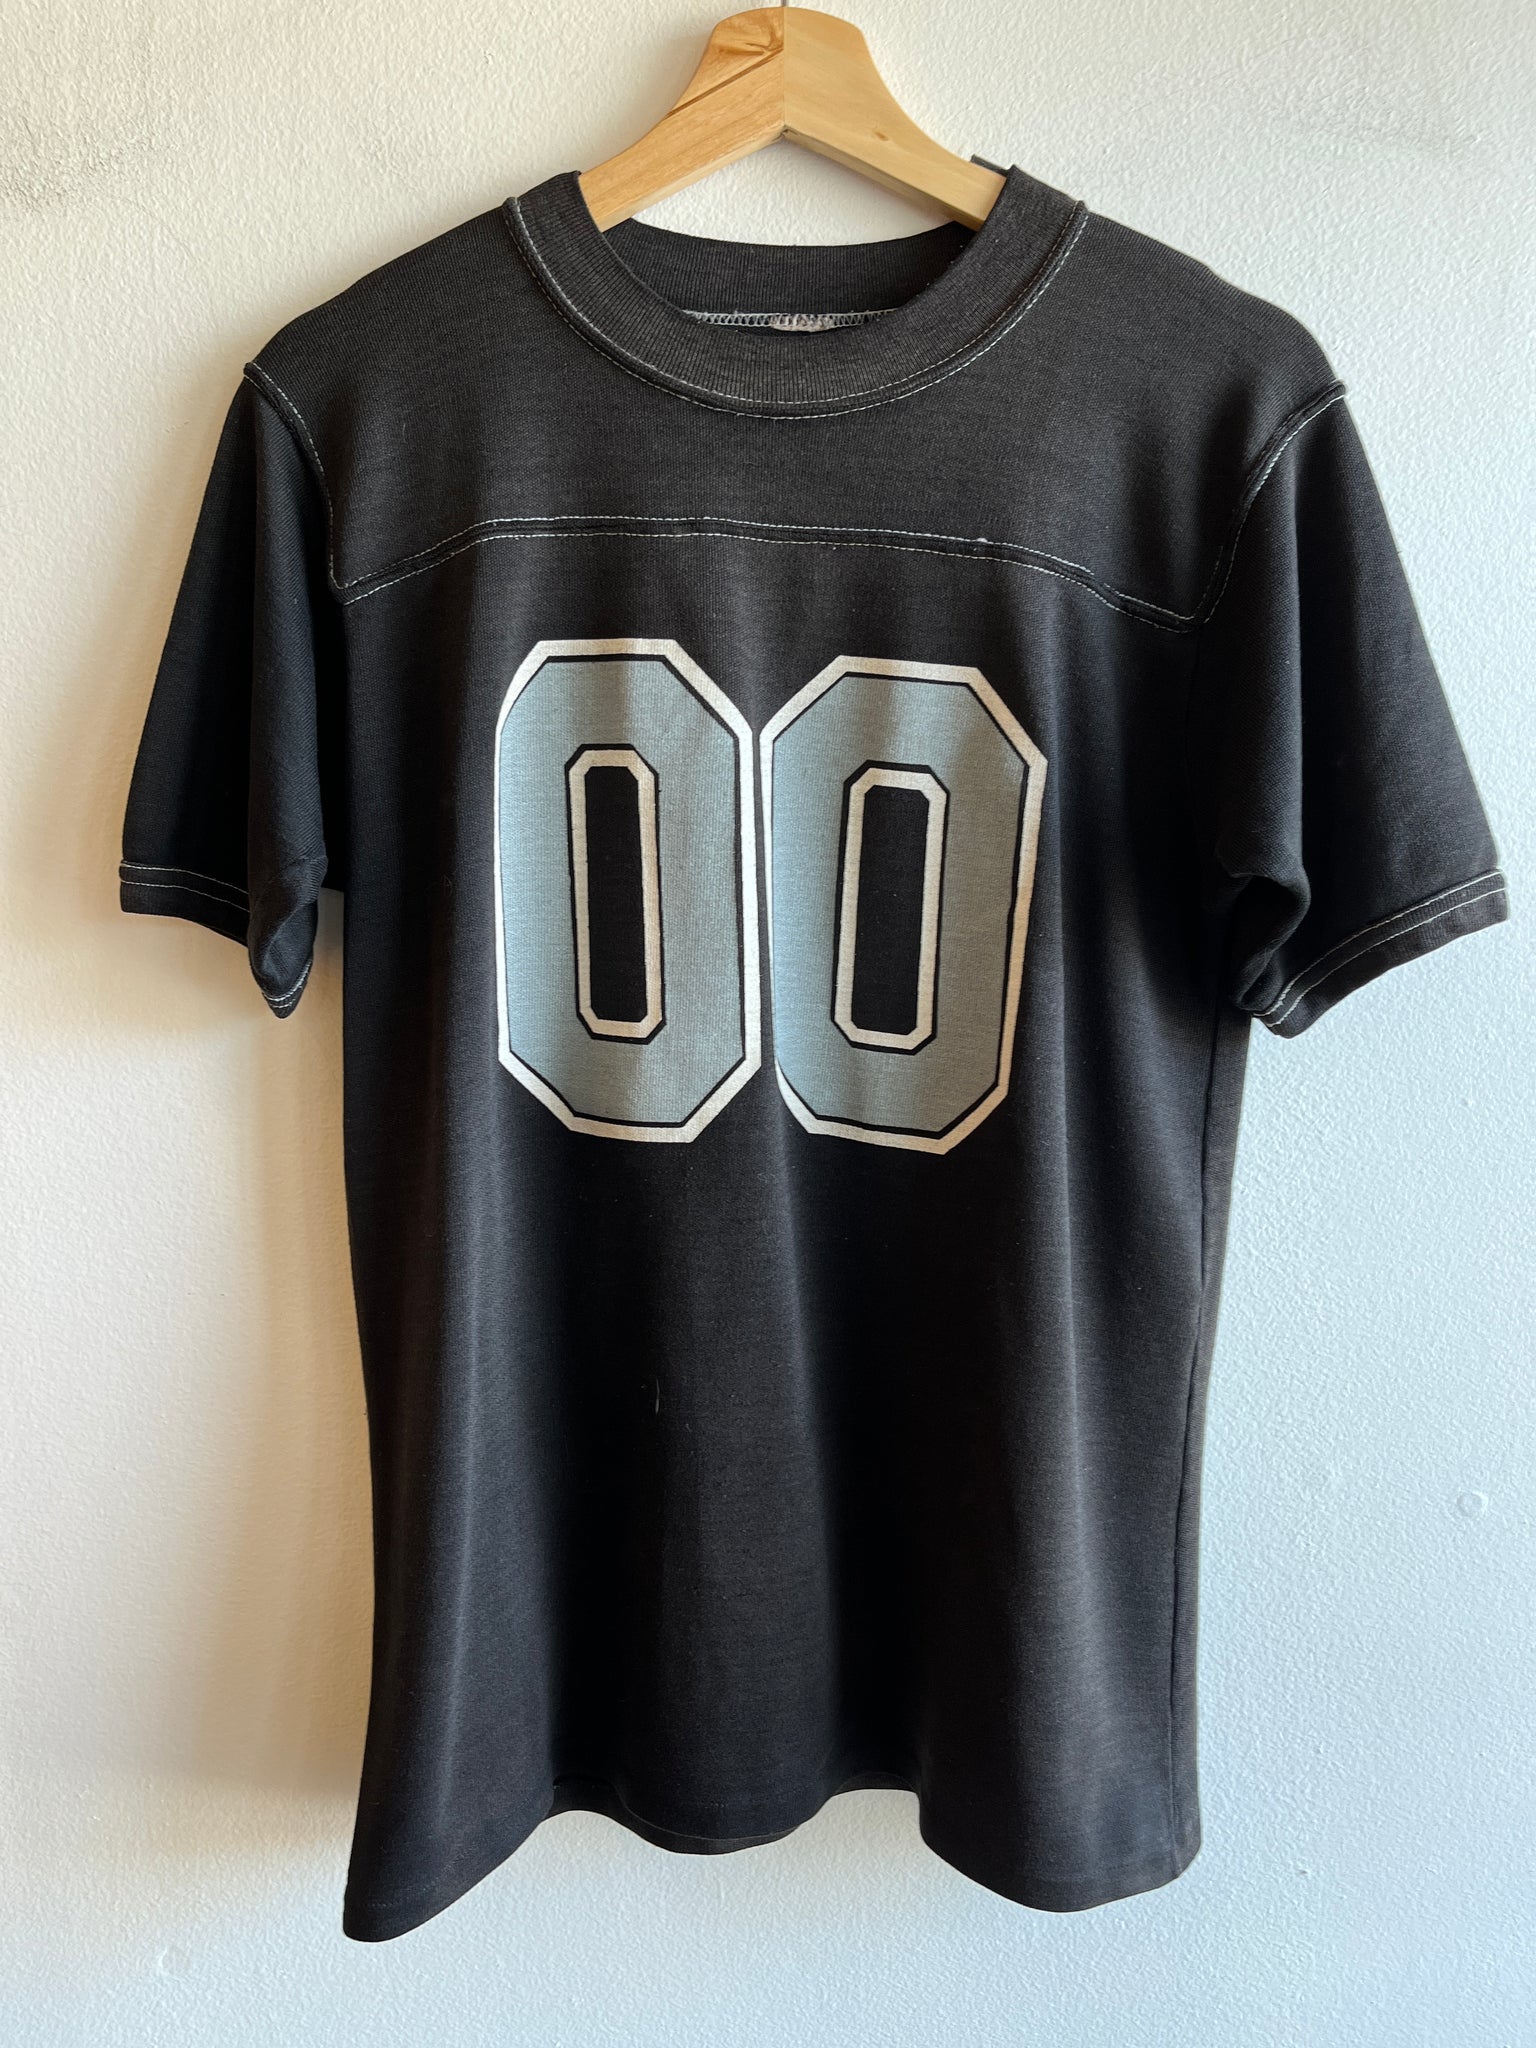 Vintage 1970’s Cotton Football Jersey T-shirt